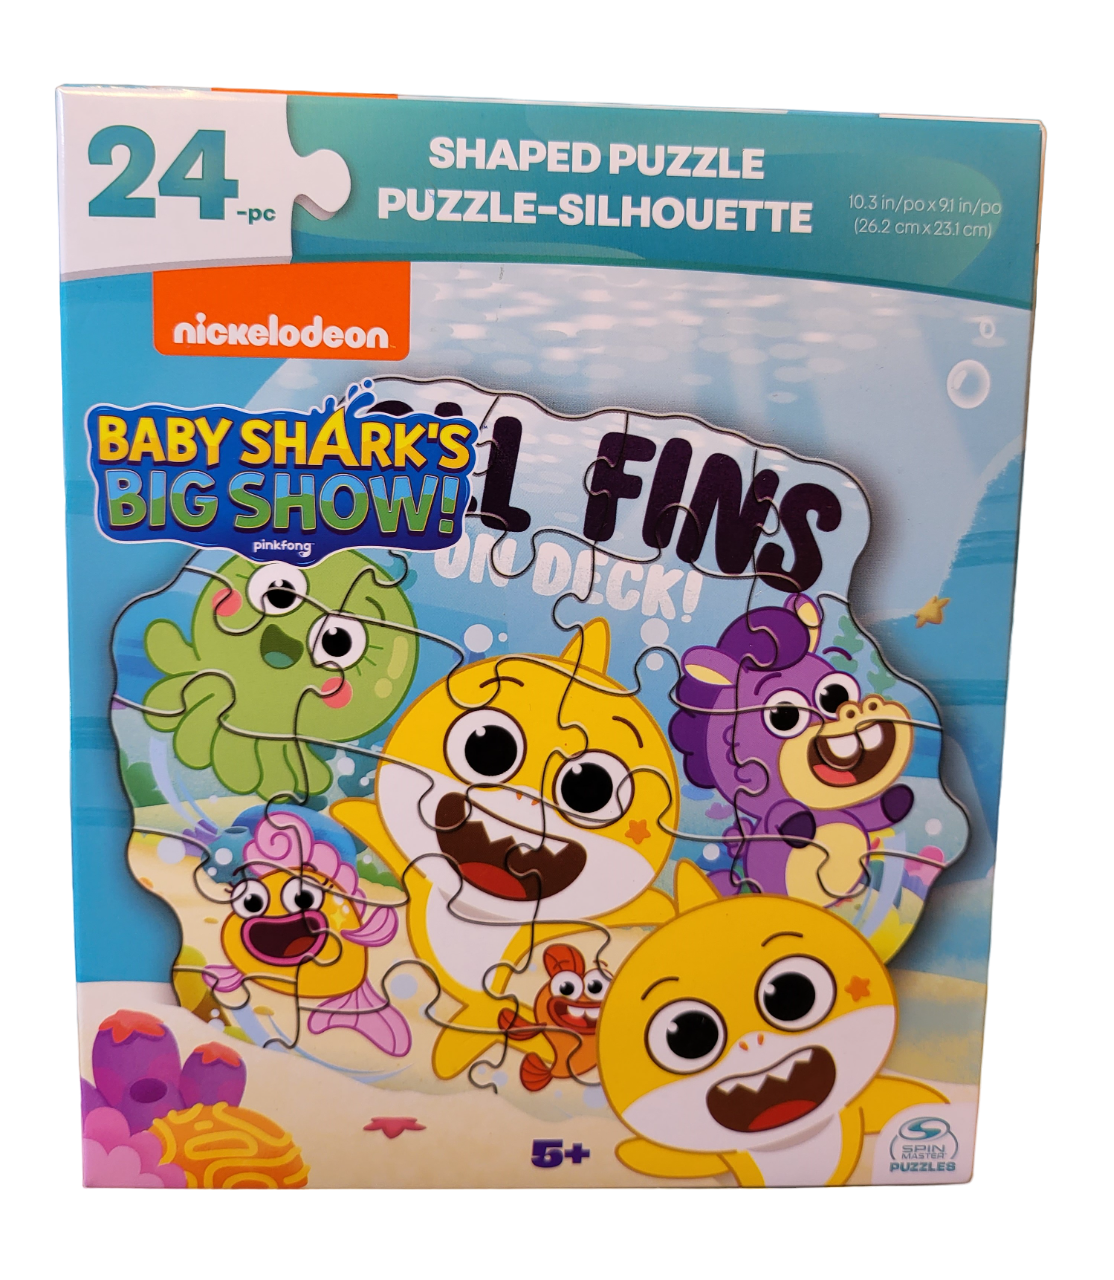 Nickelodeon Baby Shark 24 Pc Shaped Jigsaw Puzzle - New - Baby Shark's Big Show!